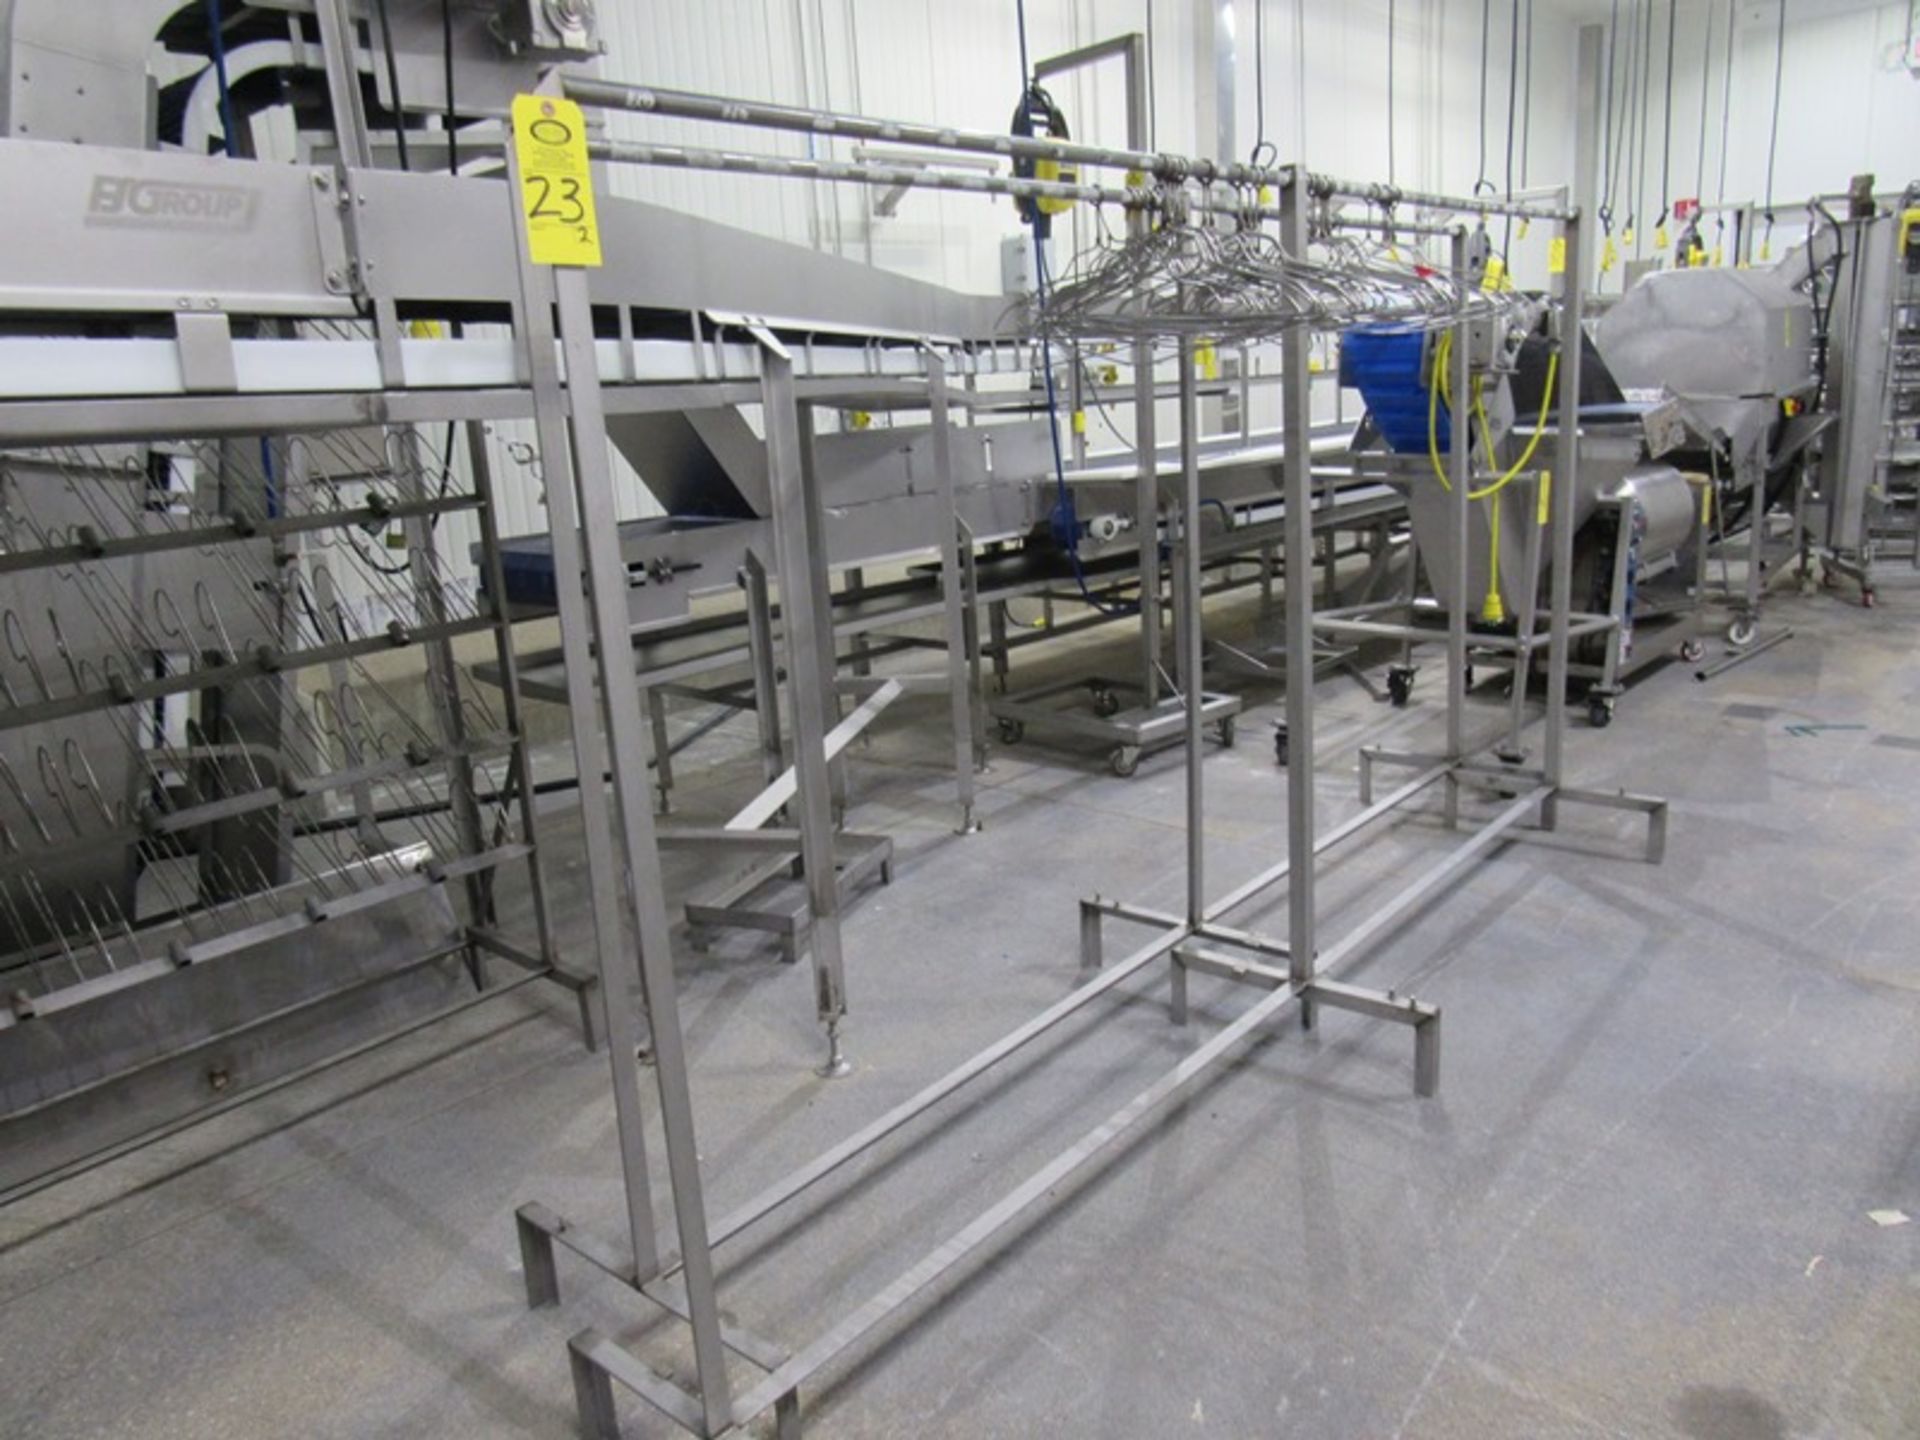 Stainless Steel Garment Rack, 24" W X 124" L X 69" T (Located inTrailer in Sandwich, IL- Loading